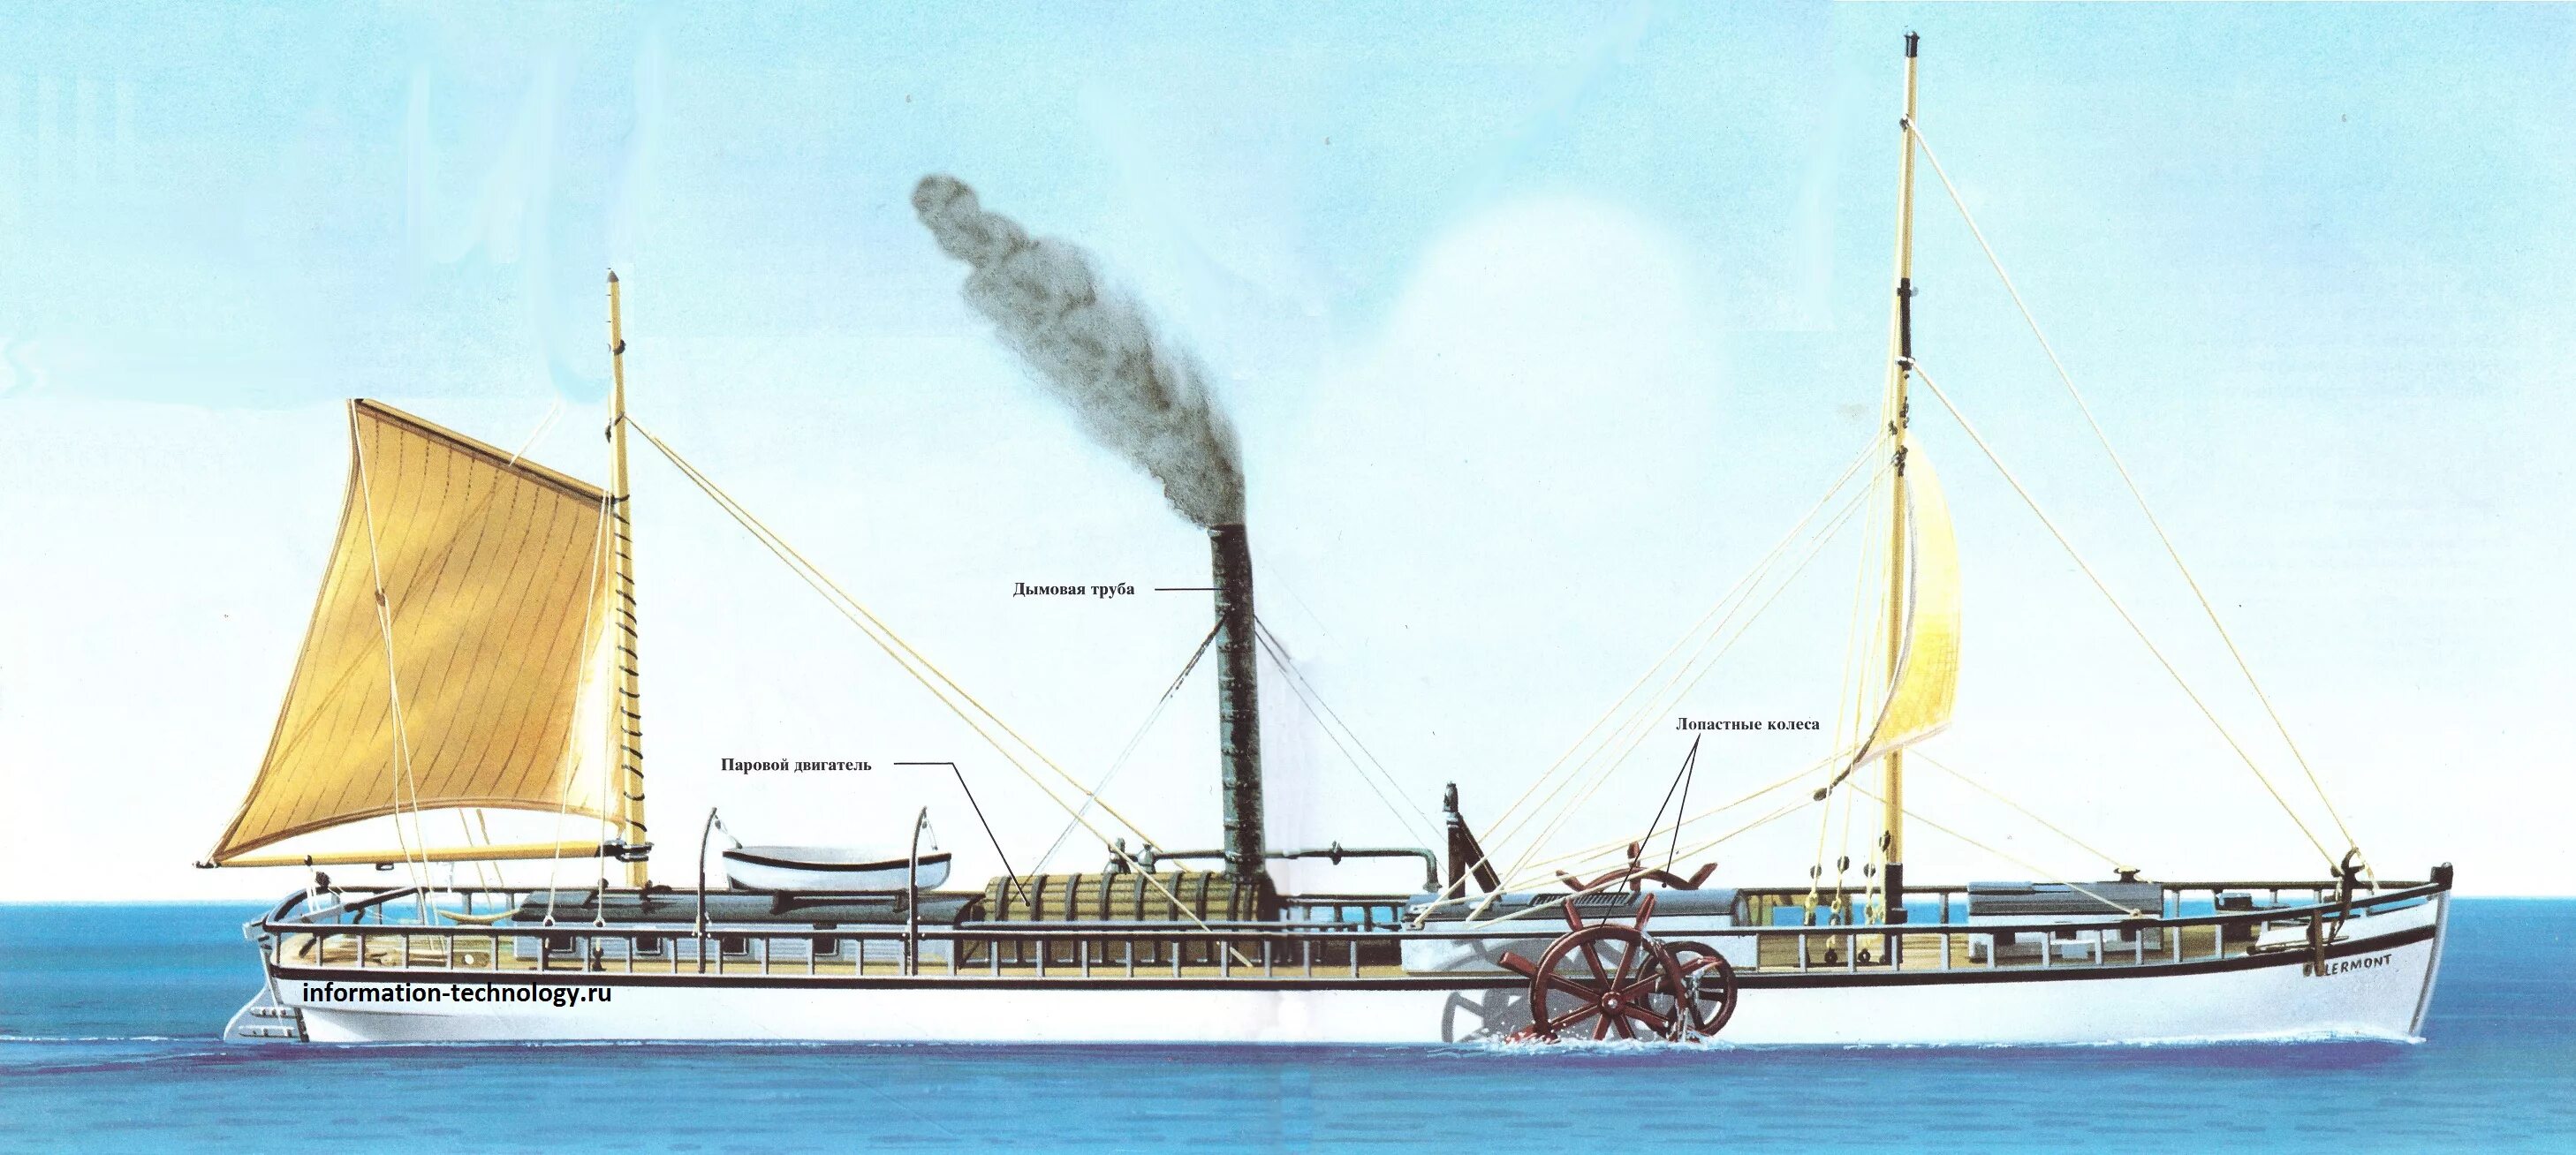 Характеристики парохода. Пароход Клермонт 1807.